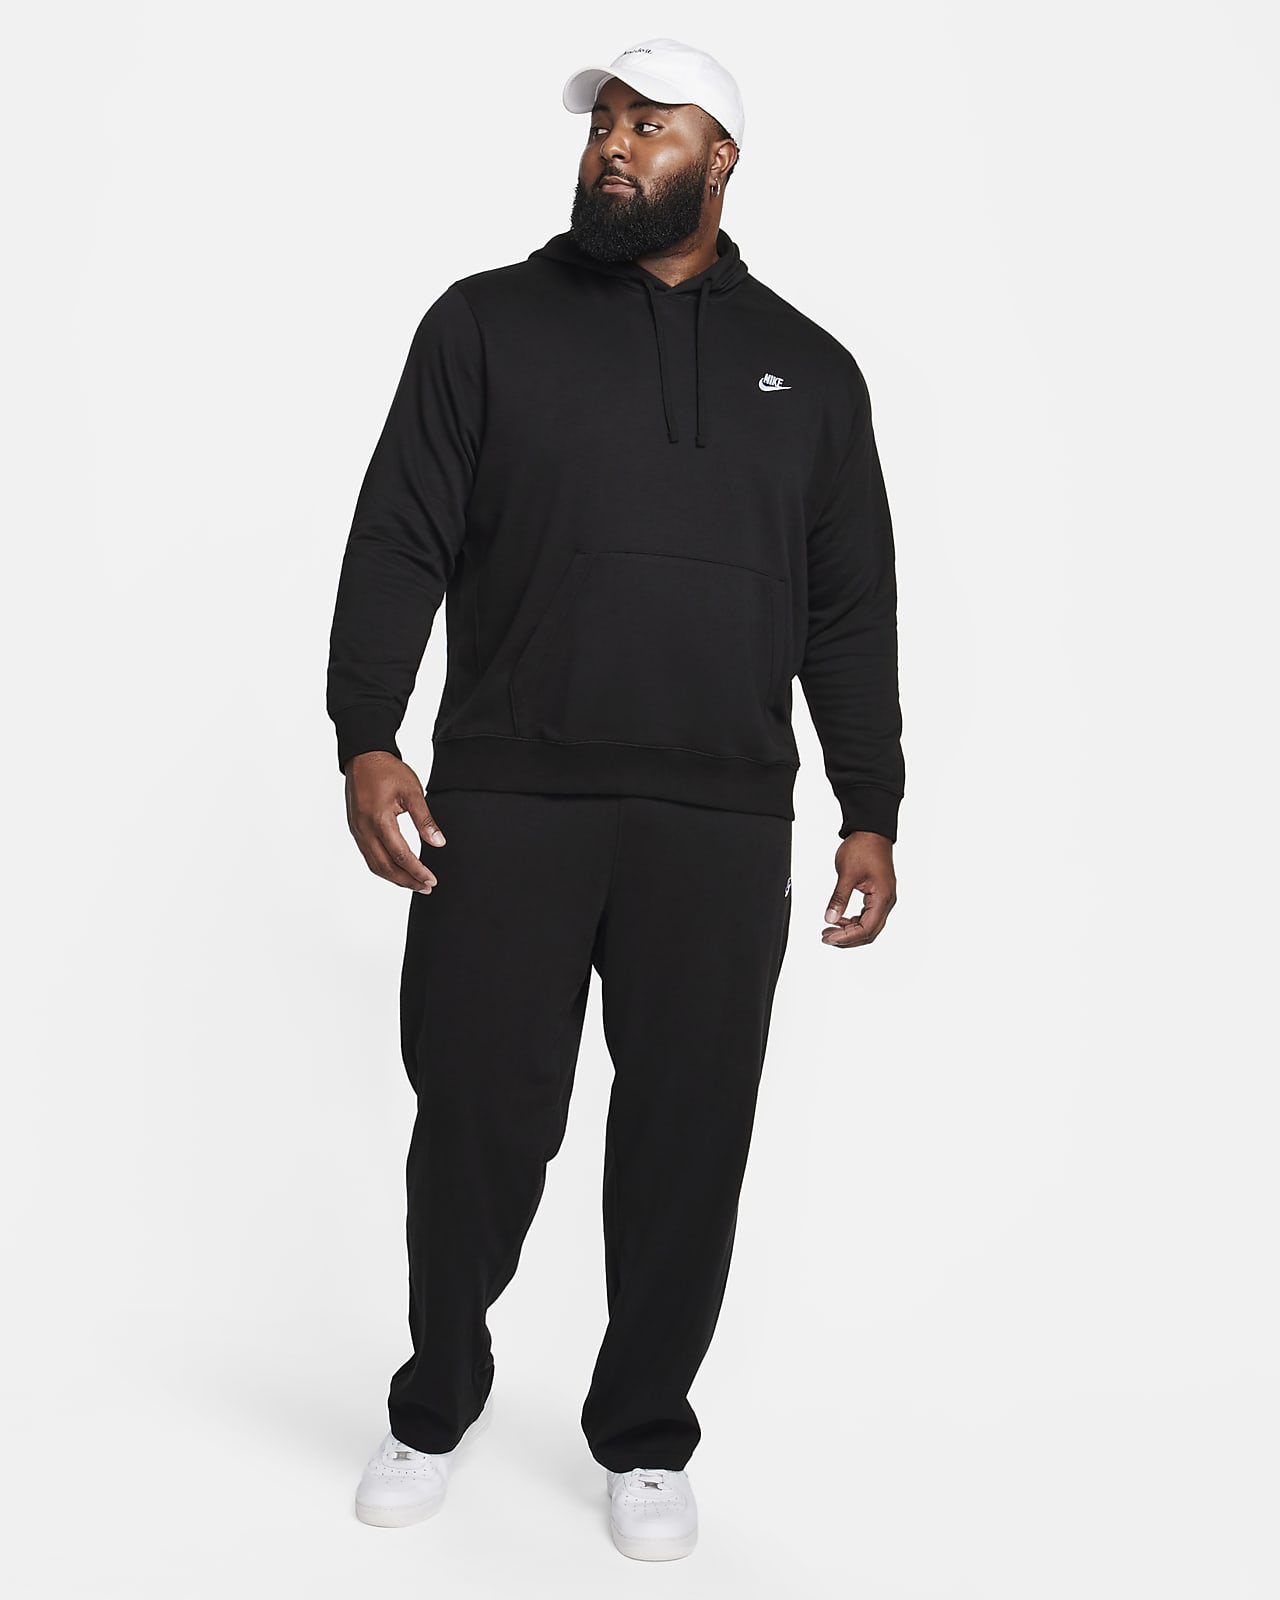 Nike Sportswear Club Men's Pullover Hoodie